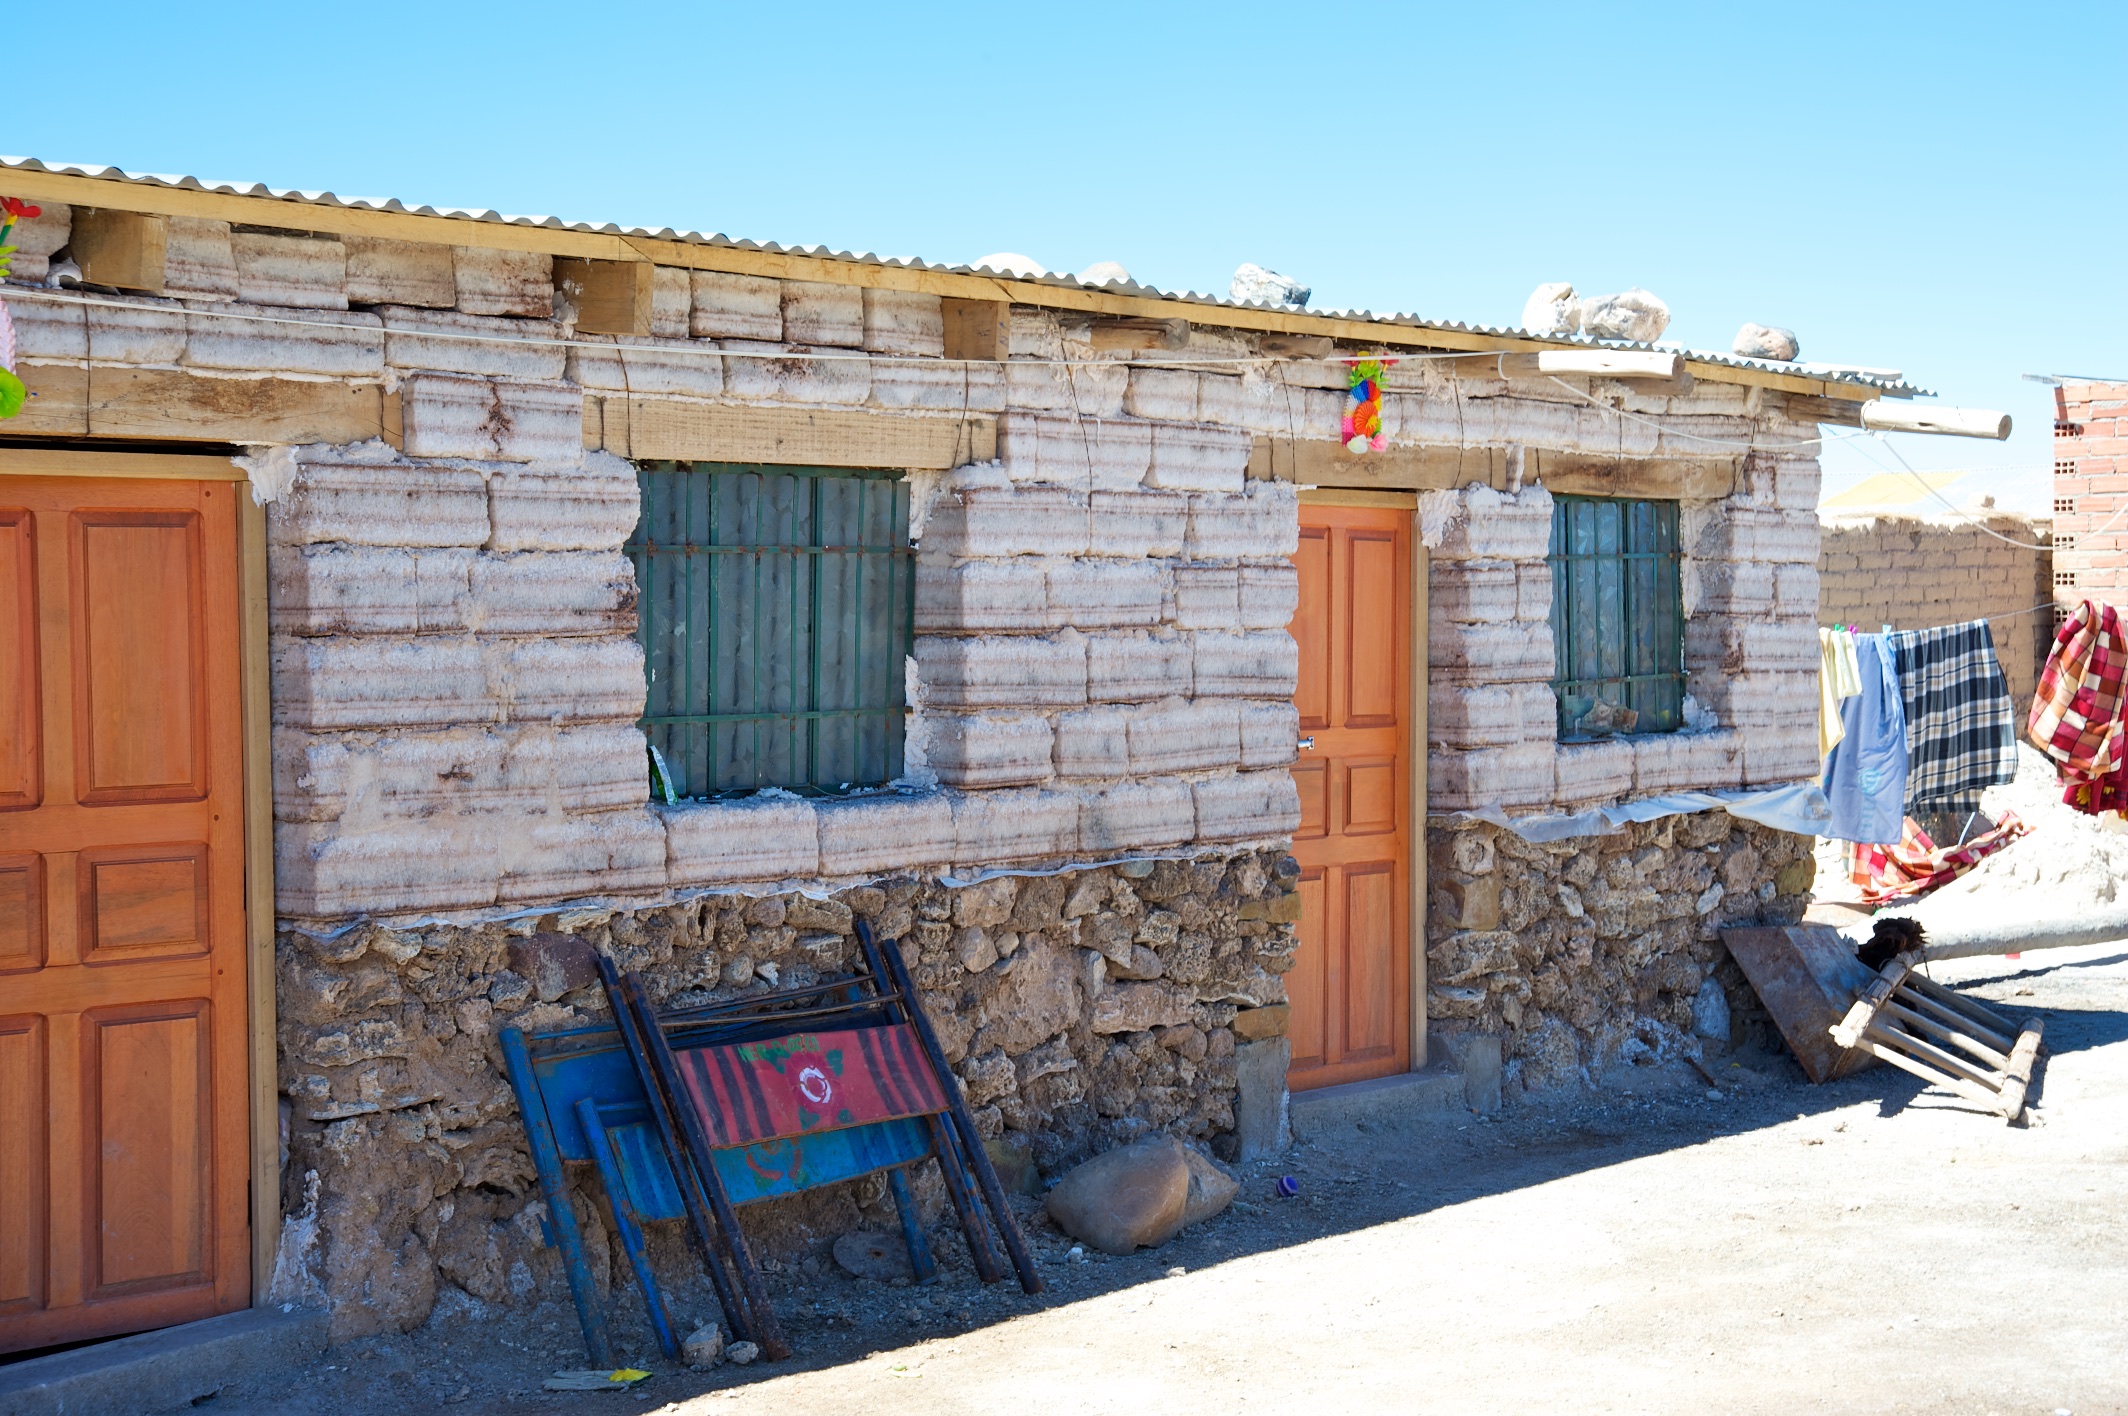  Salt brick house, village near Uyuni, Bolivia 